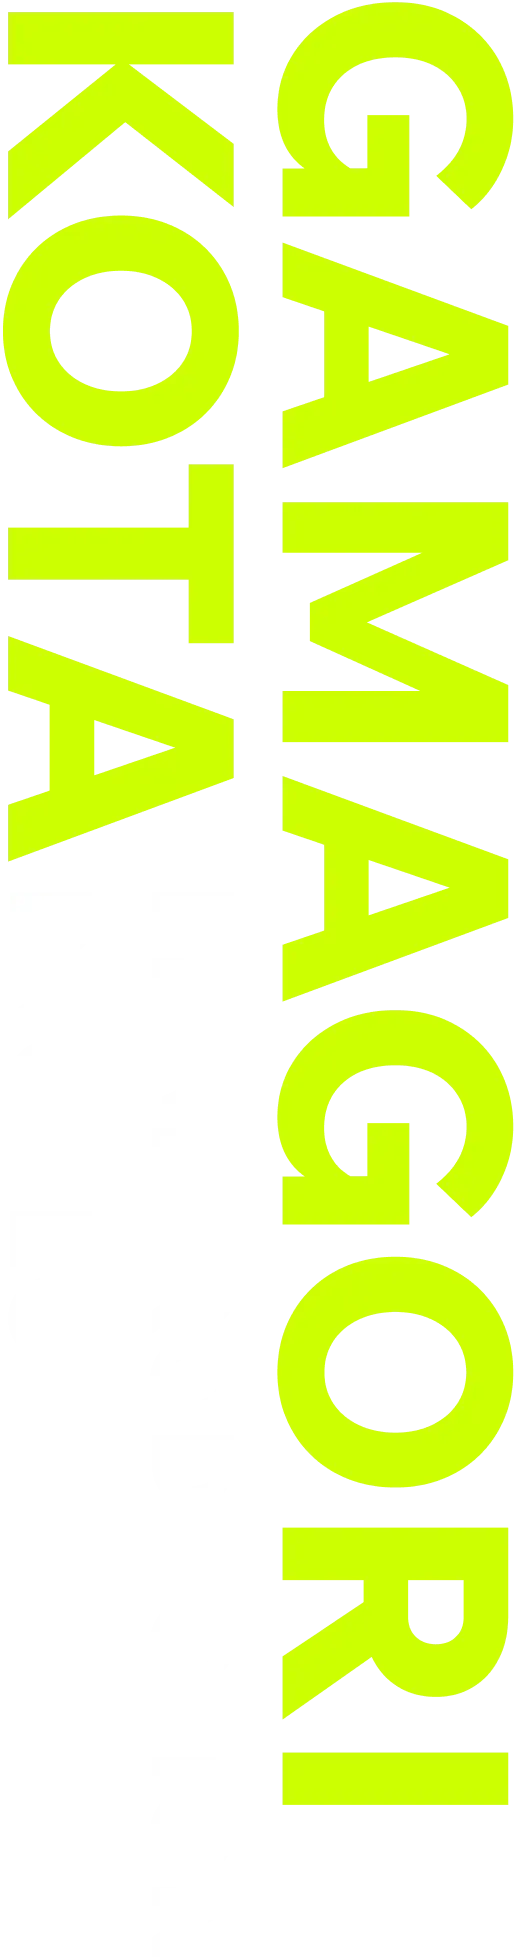 GAMAGORI/KOTA
FILM PRODUCTION PROJECT